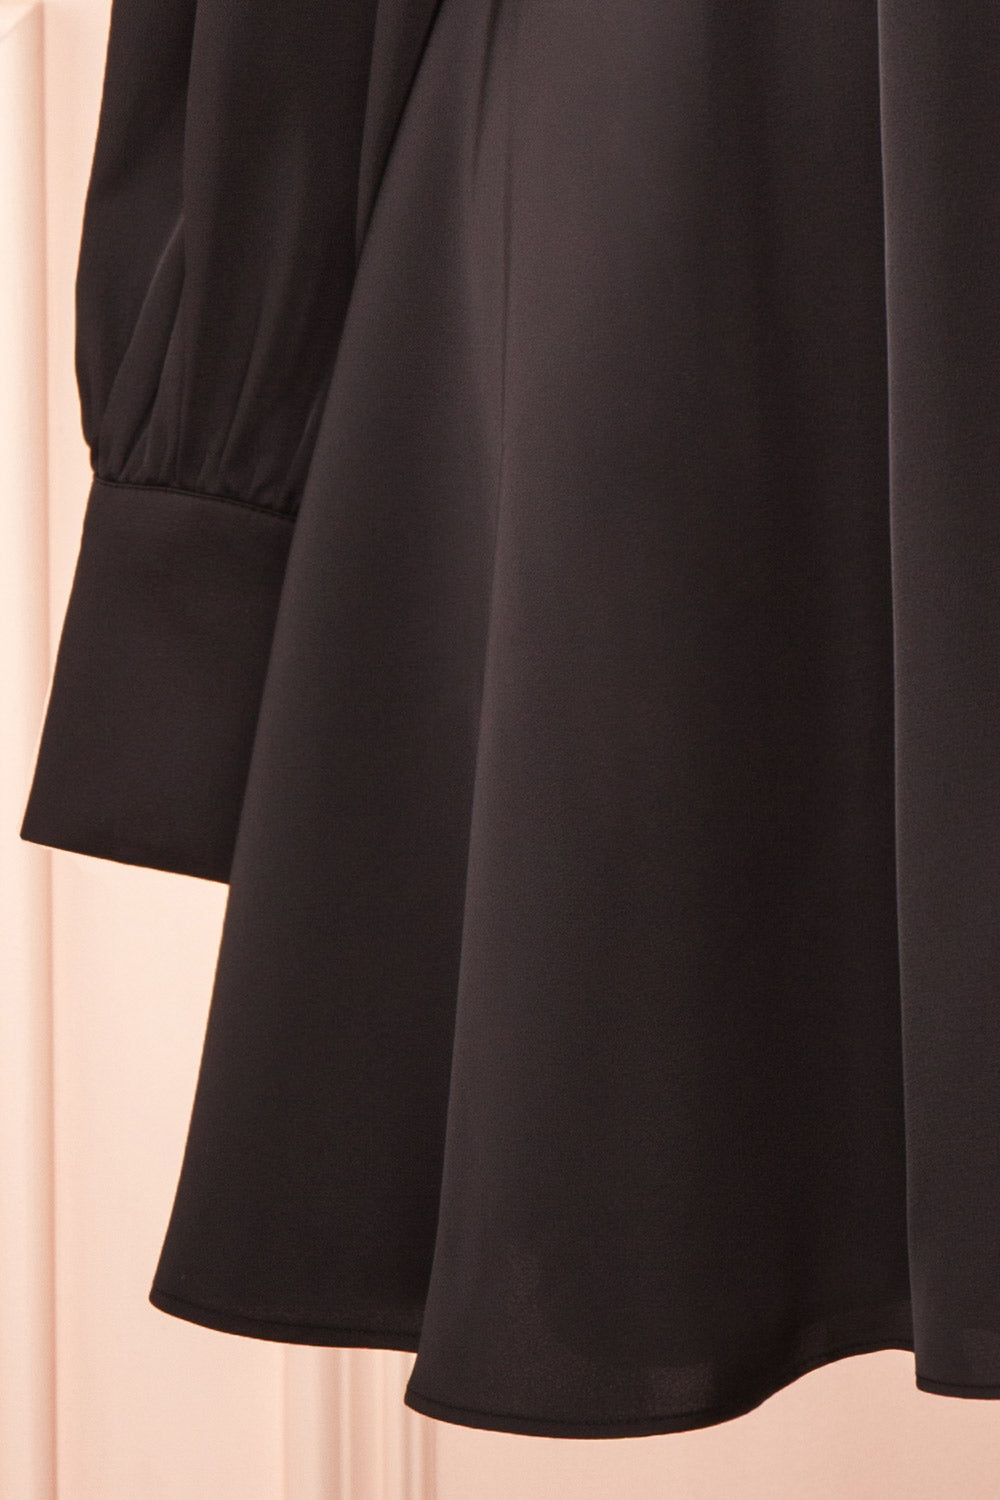 Felestine Black Short Satin Wrap Dress | Boutique 1861  bottom